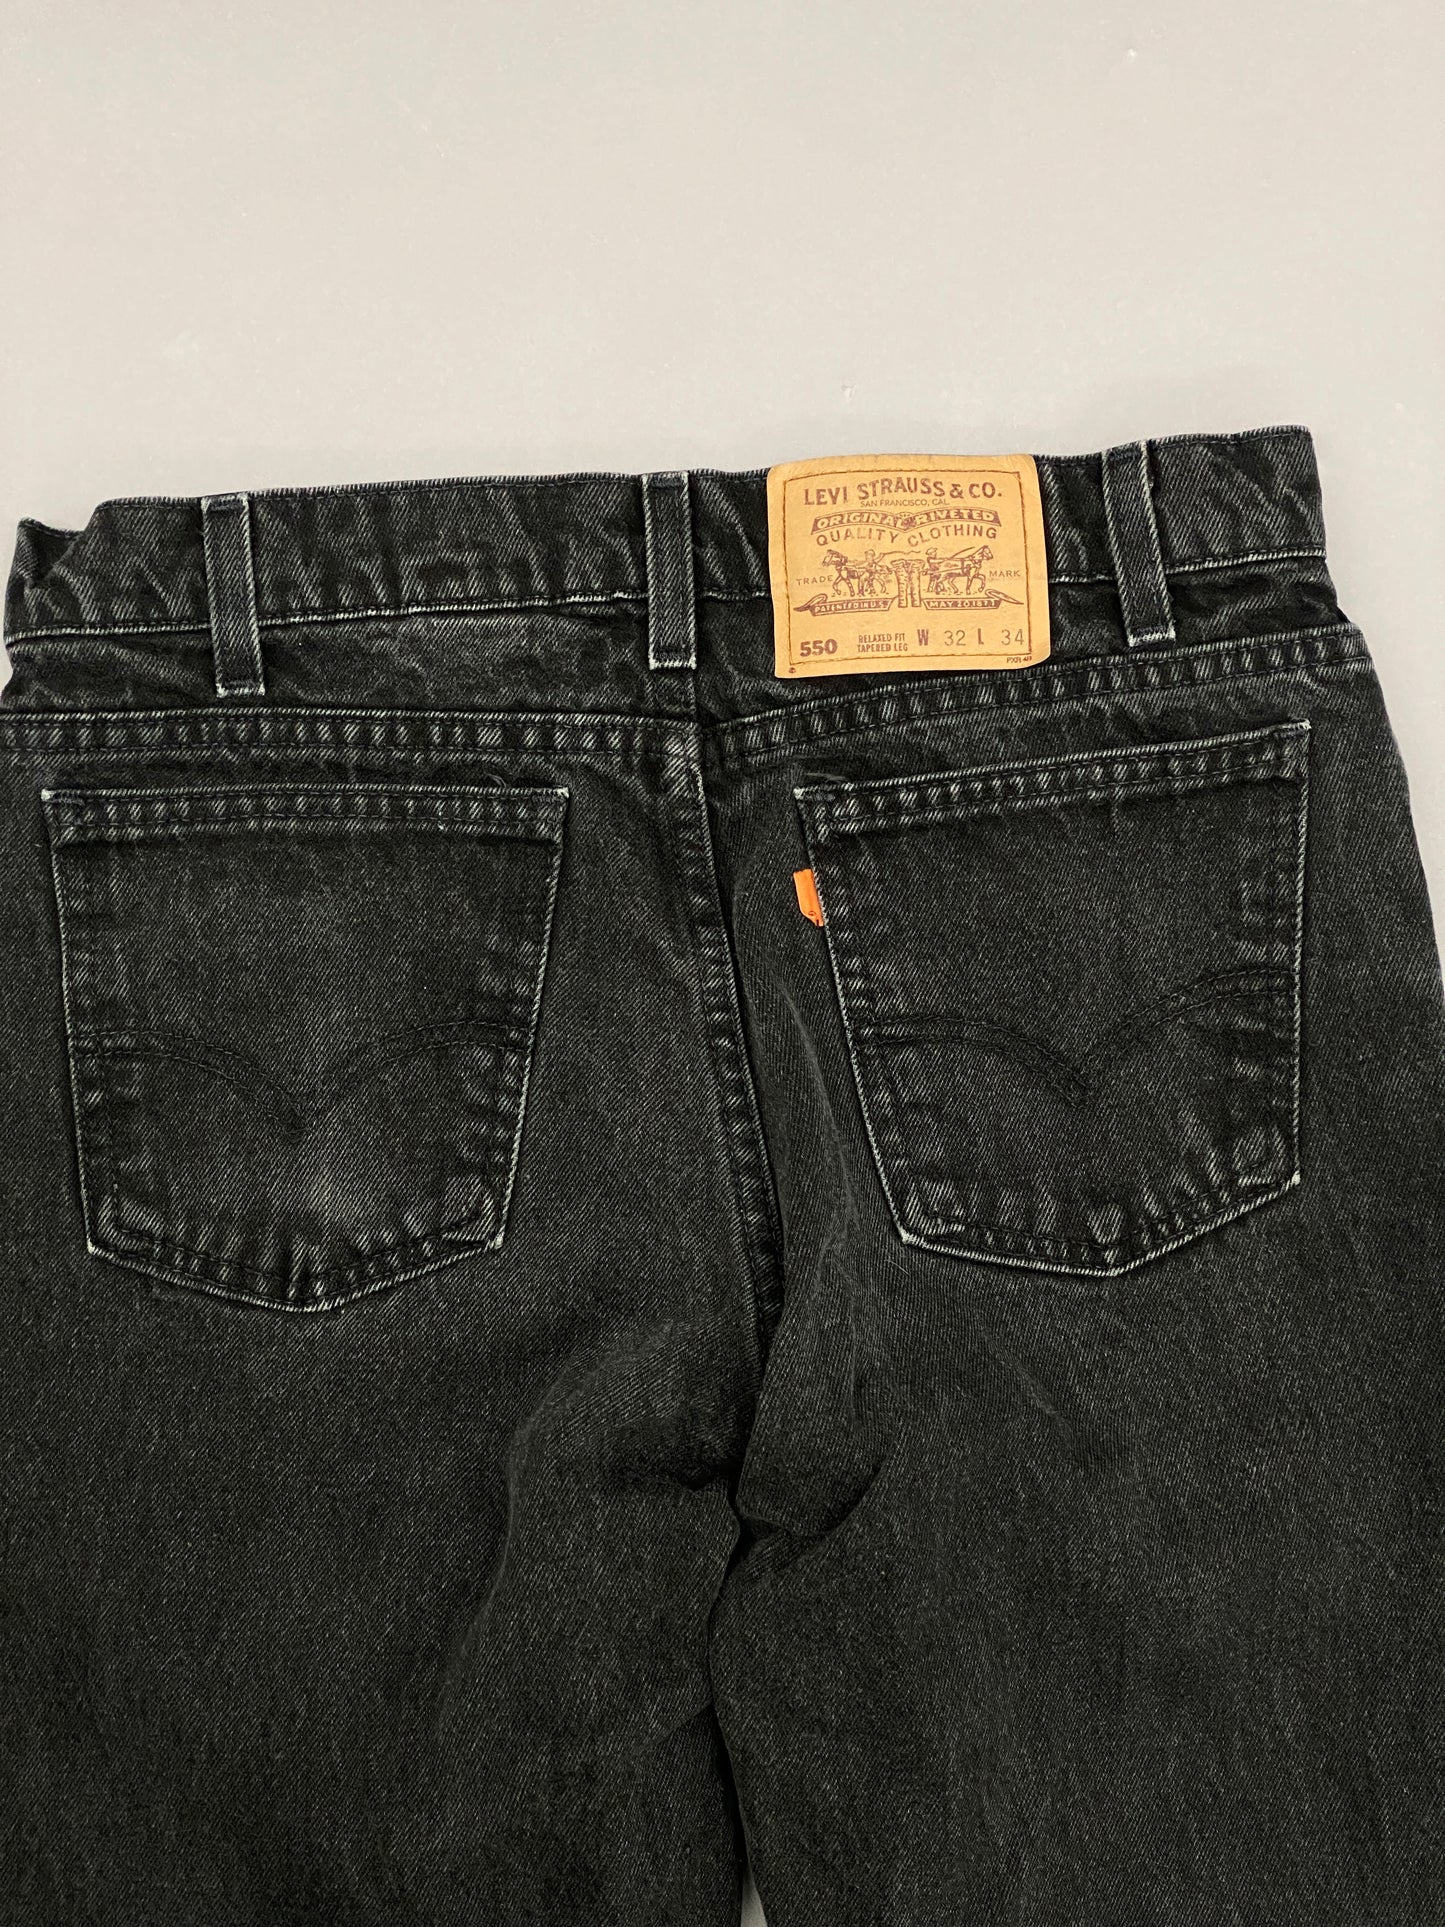 Levis Orange Tab Vintage Jeans - 32x34